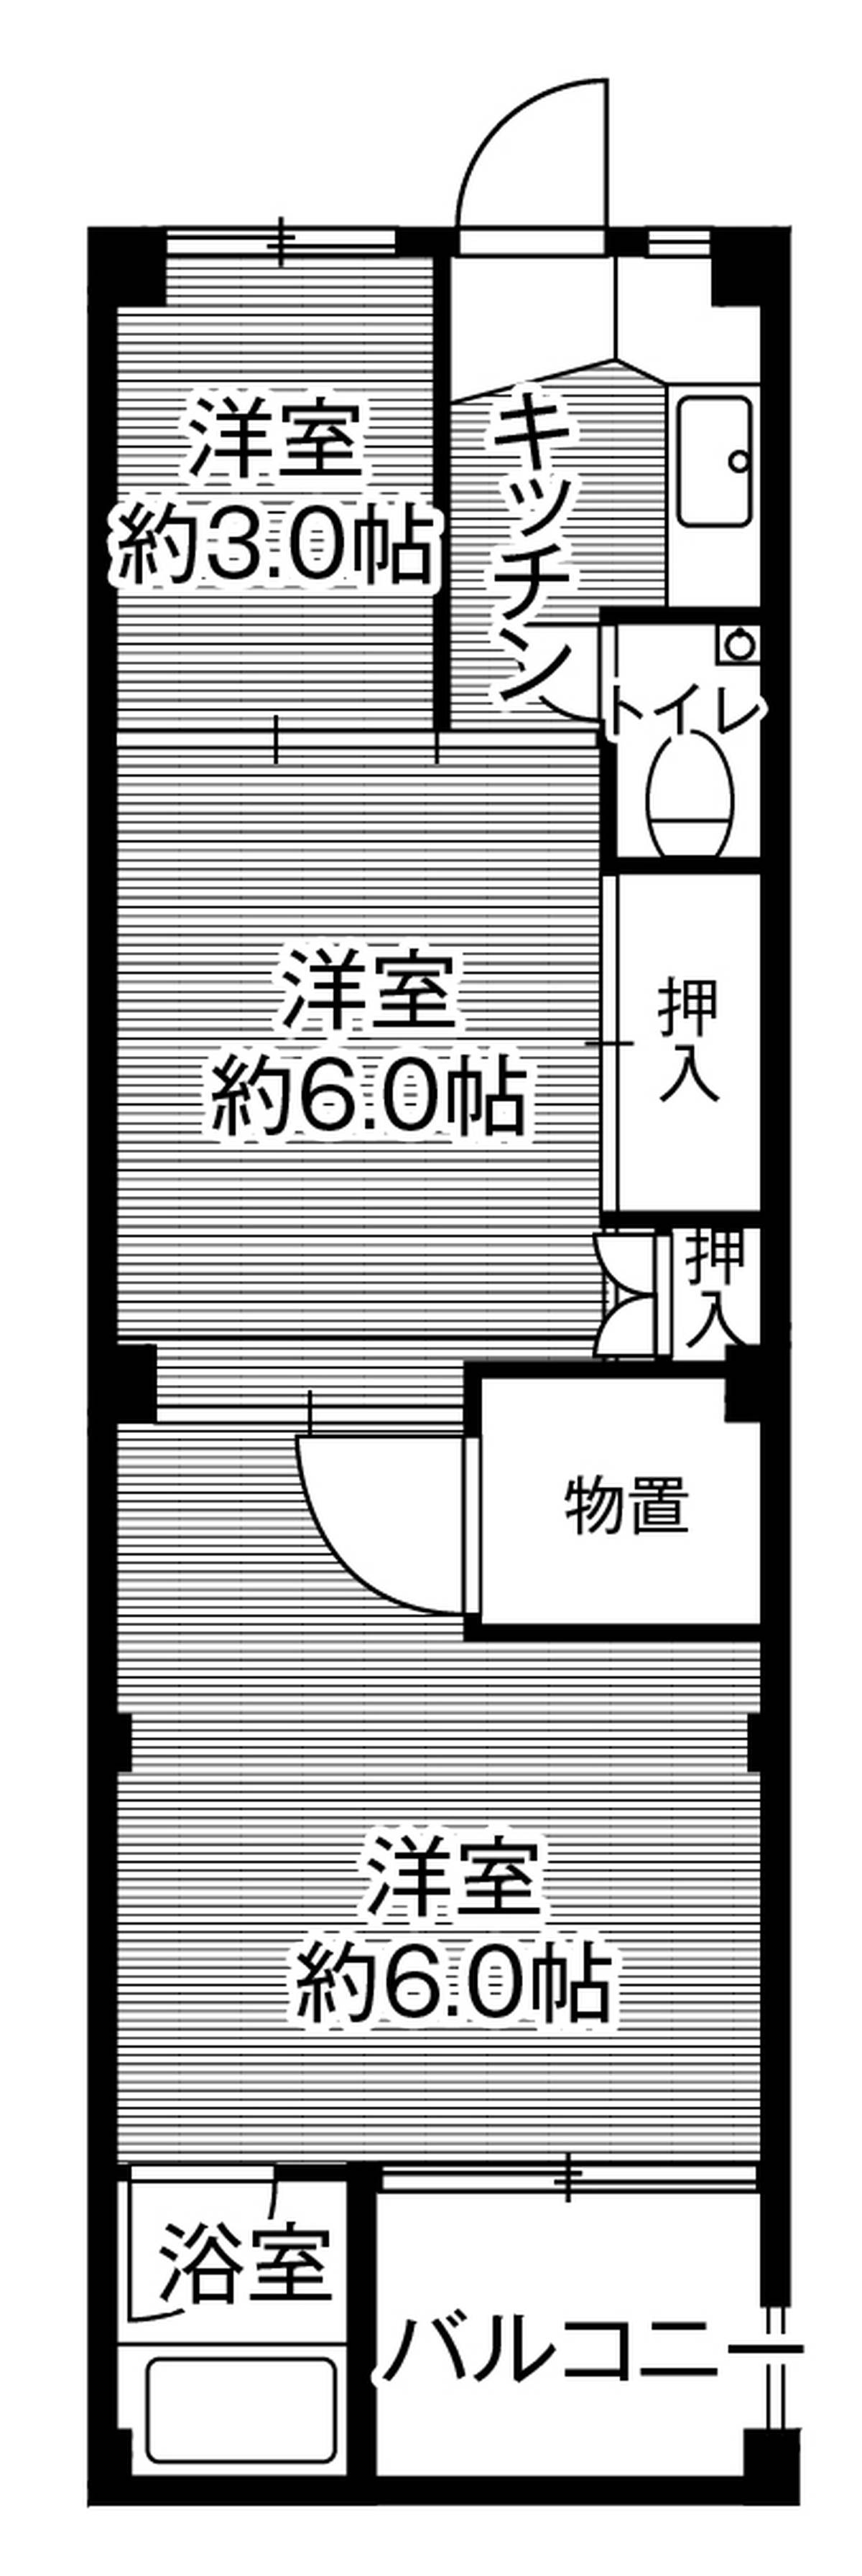 3K floorplan of Village House Shimosarachi in Hatsukaichi-shi